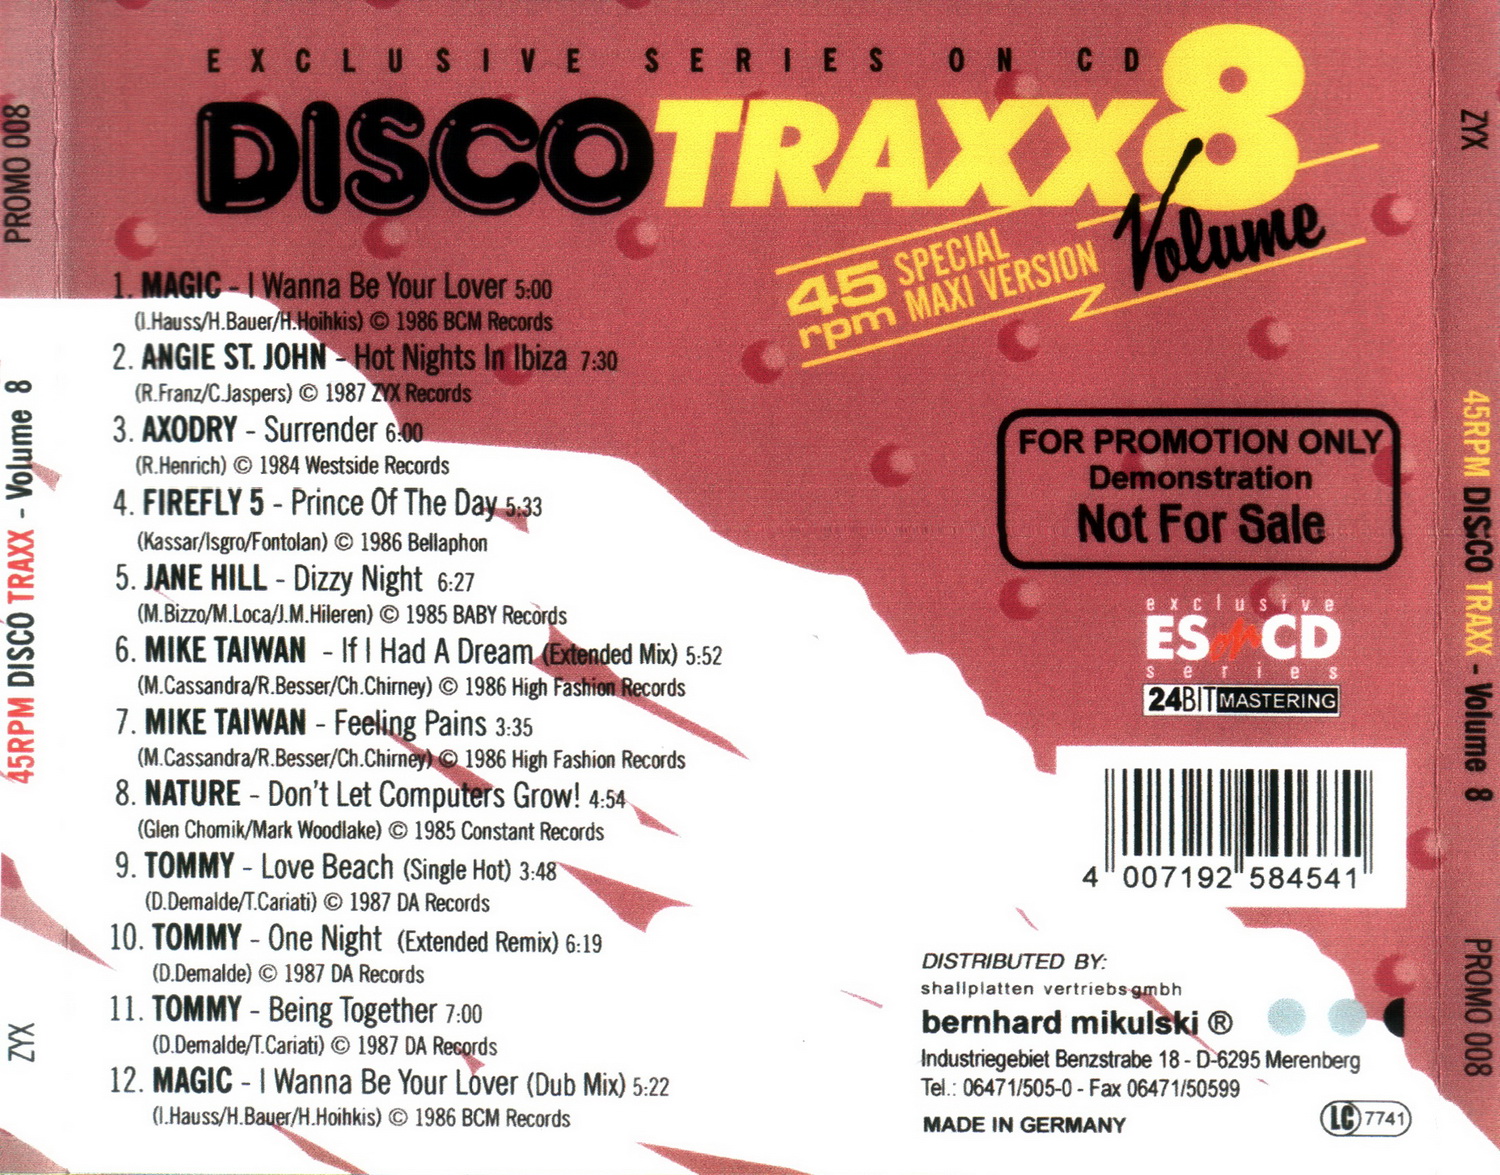 Грузинская песня итало диско. 45rpm Disco Traxx Vol 3. 45rpm Disco Traxx Vol.01-11 (1993-1995). 45rpm Disco Traxx 5. 45rpm Disco Traxx 7.